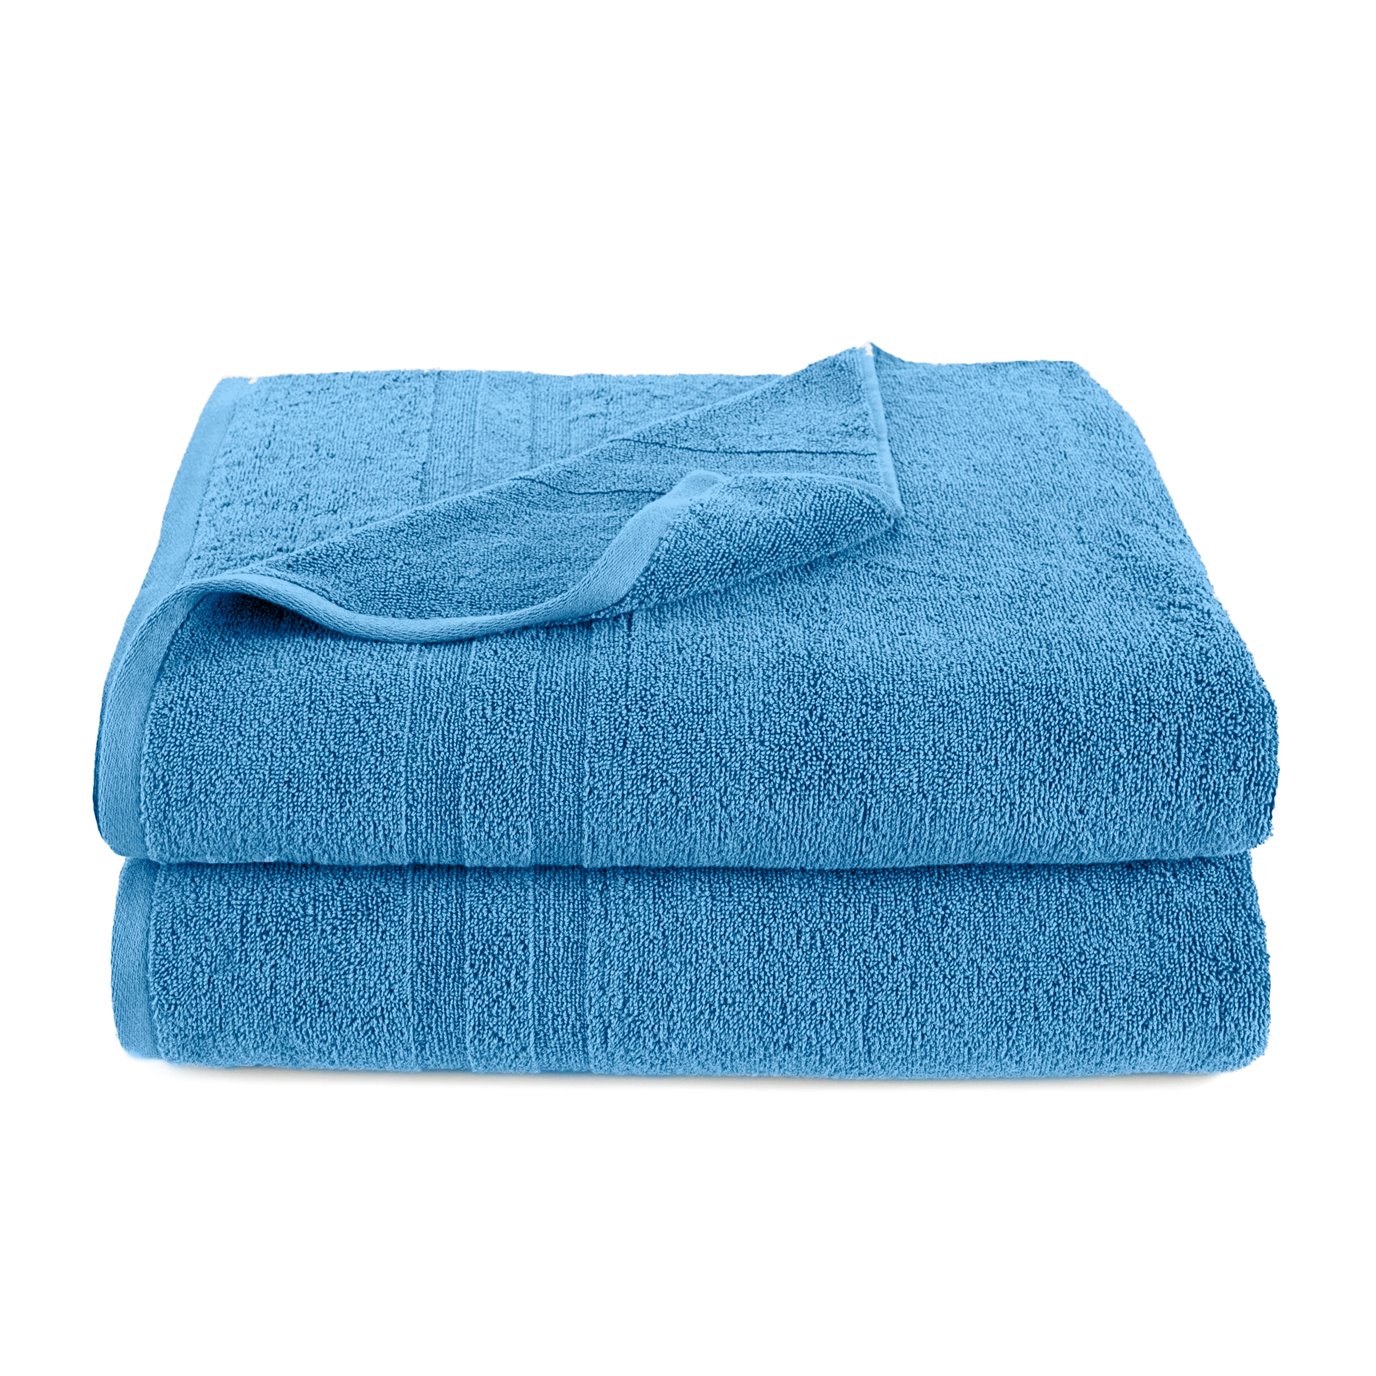 Martex Purity 2-Piece Blue Bath Sheet Set